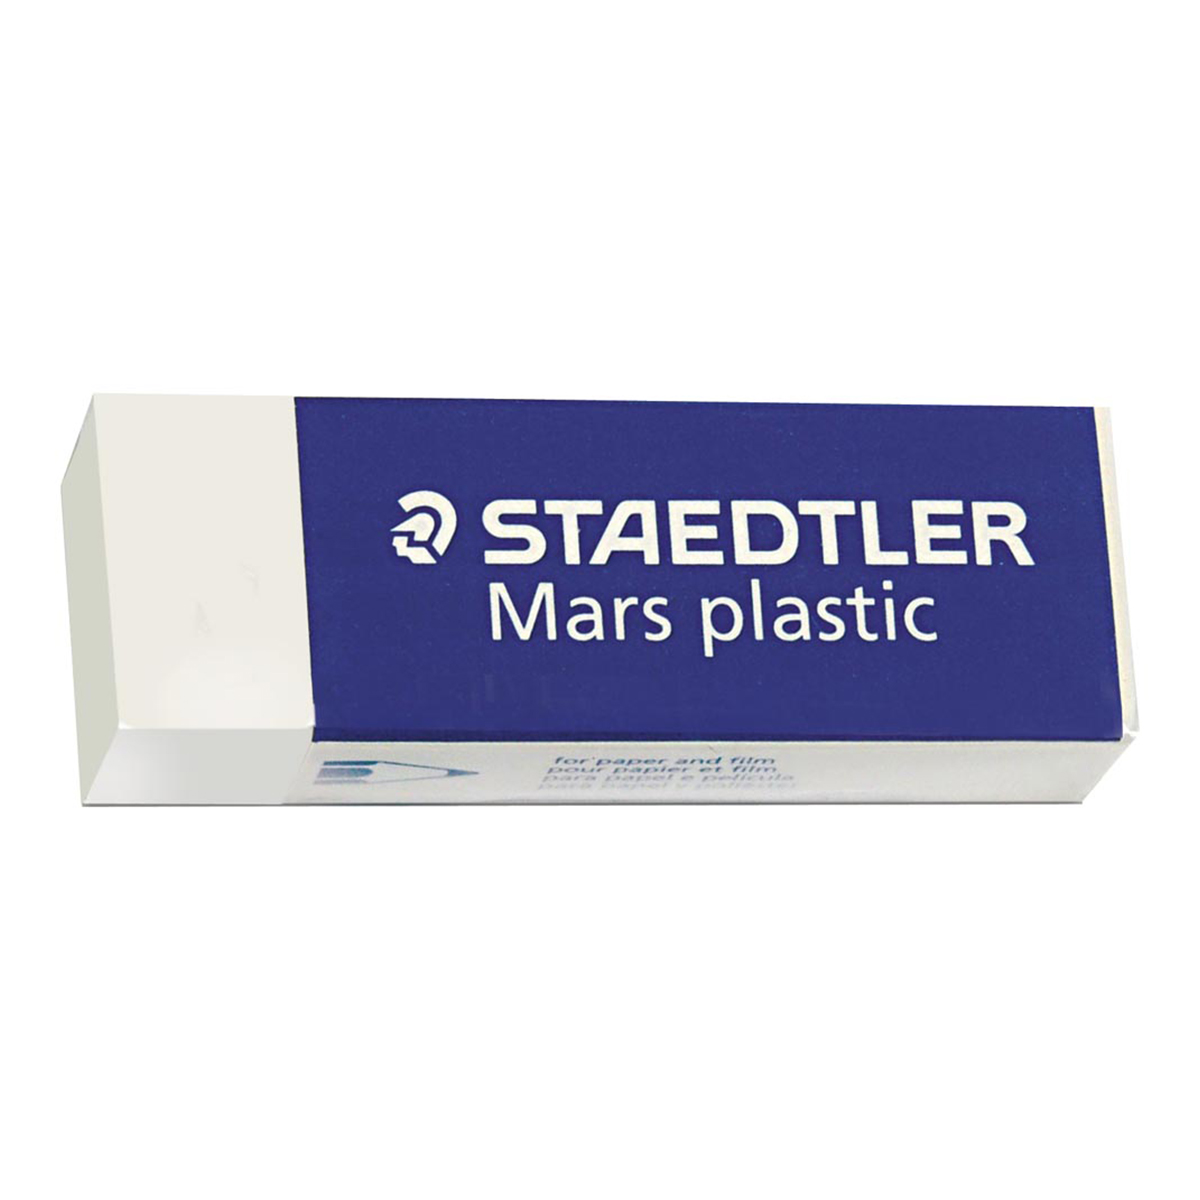 UMKC Bookstore - Staedtler Mars Plastic Eraser